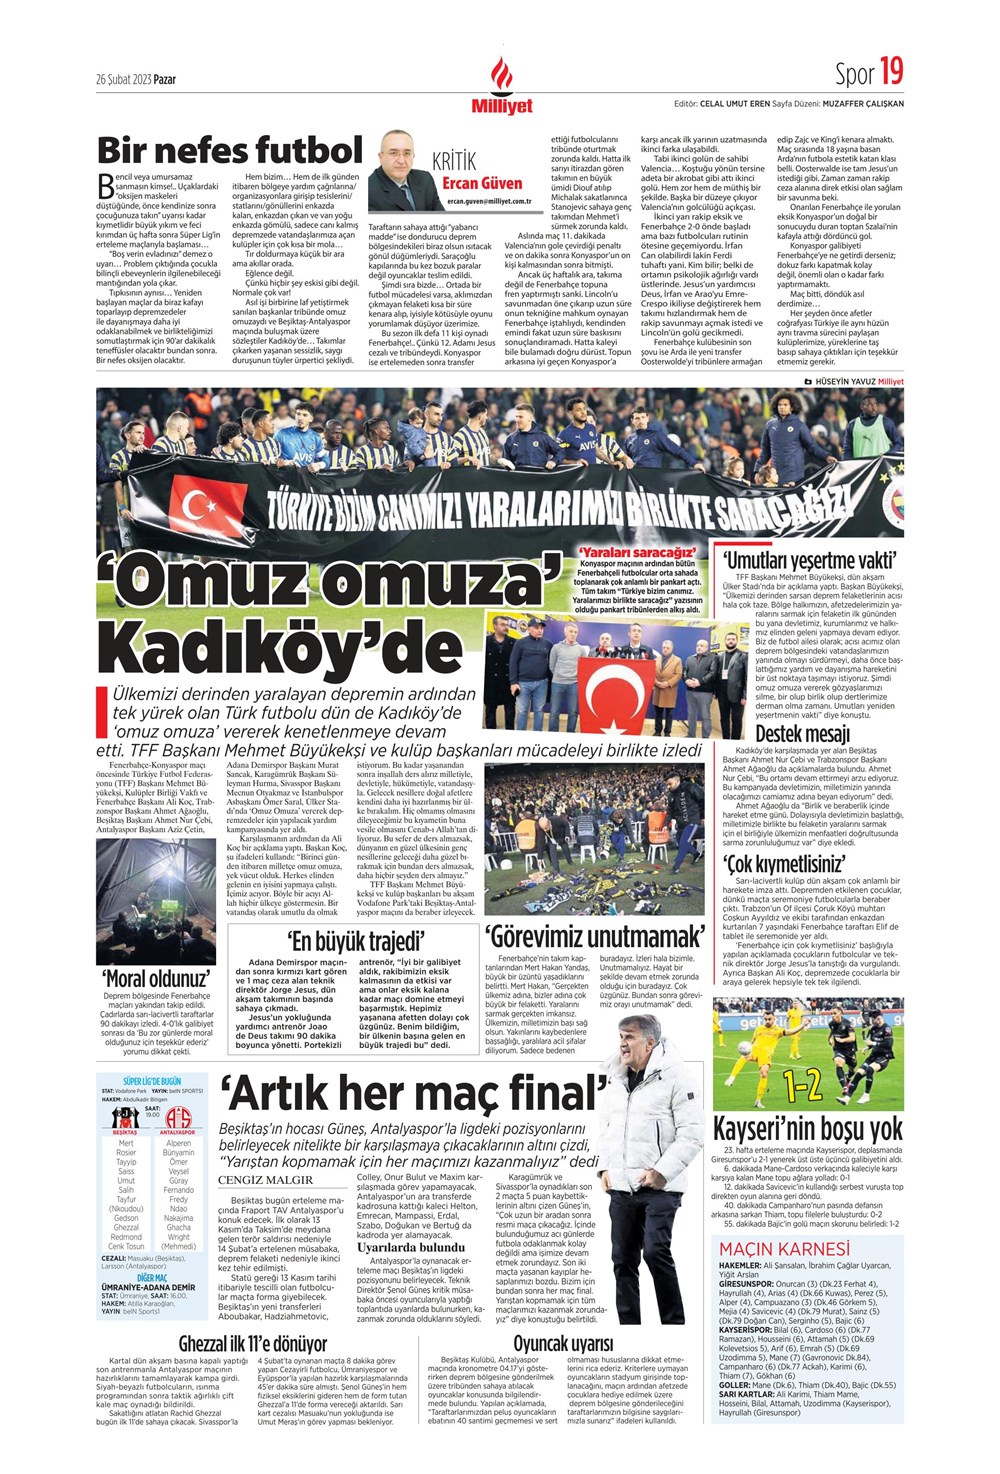 "Valenci'ağa' böyle istedi" - Sporun manşetleri  - 22. Foto